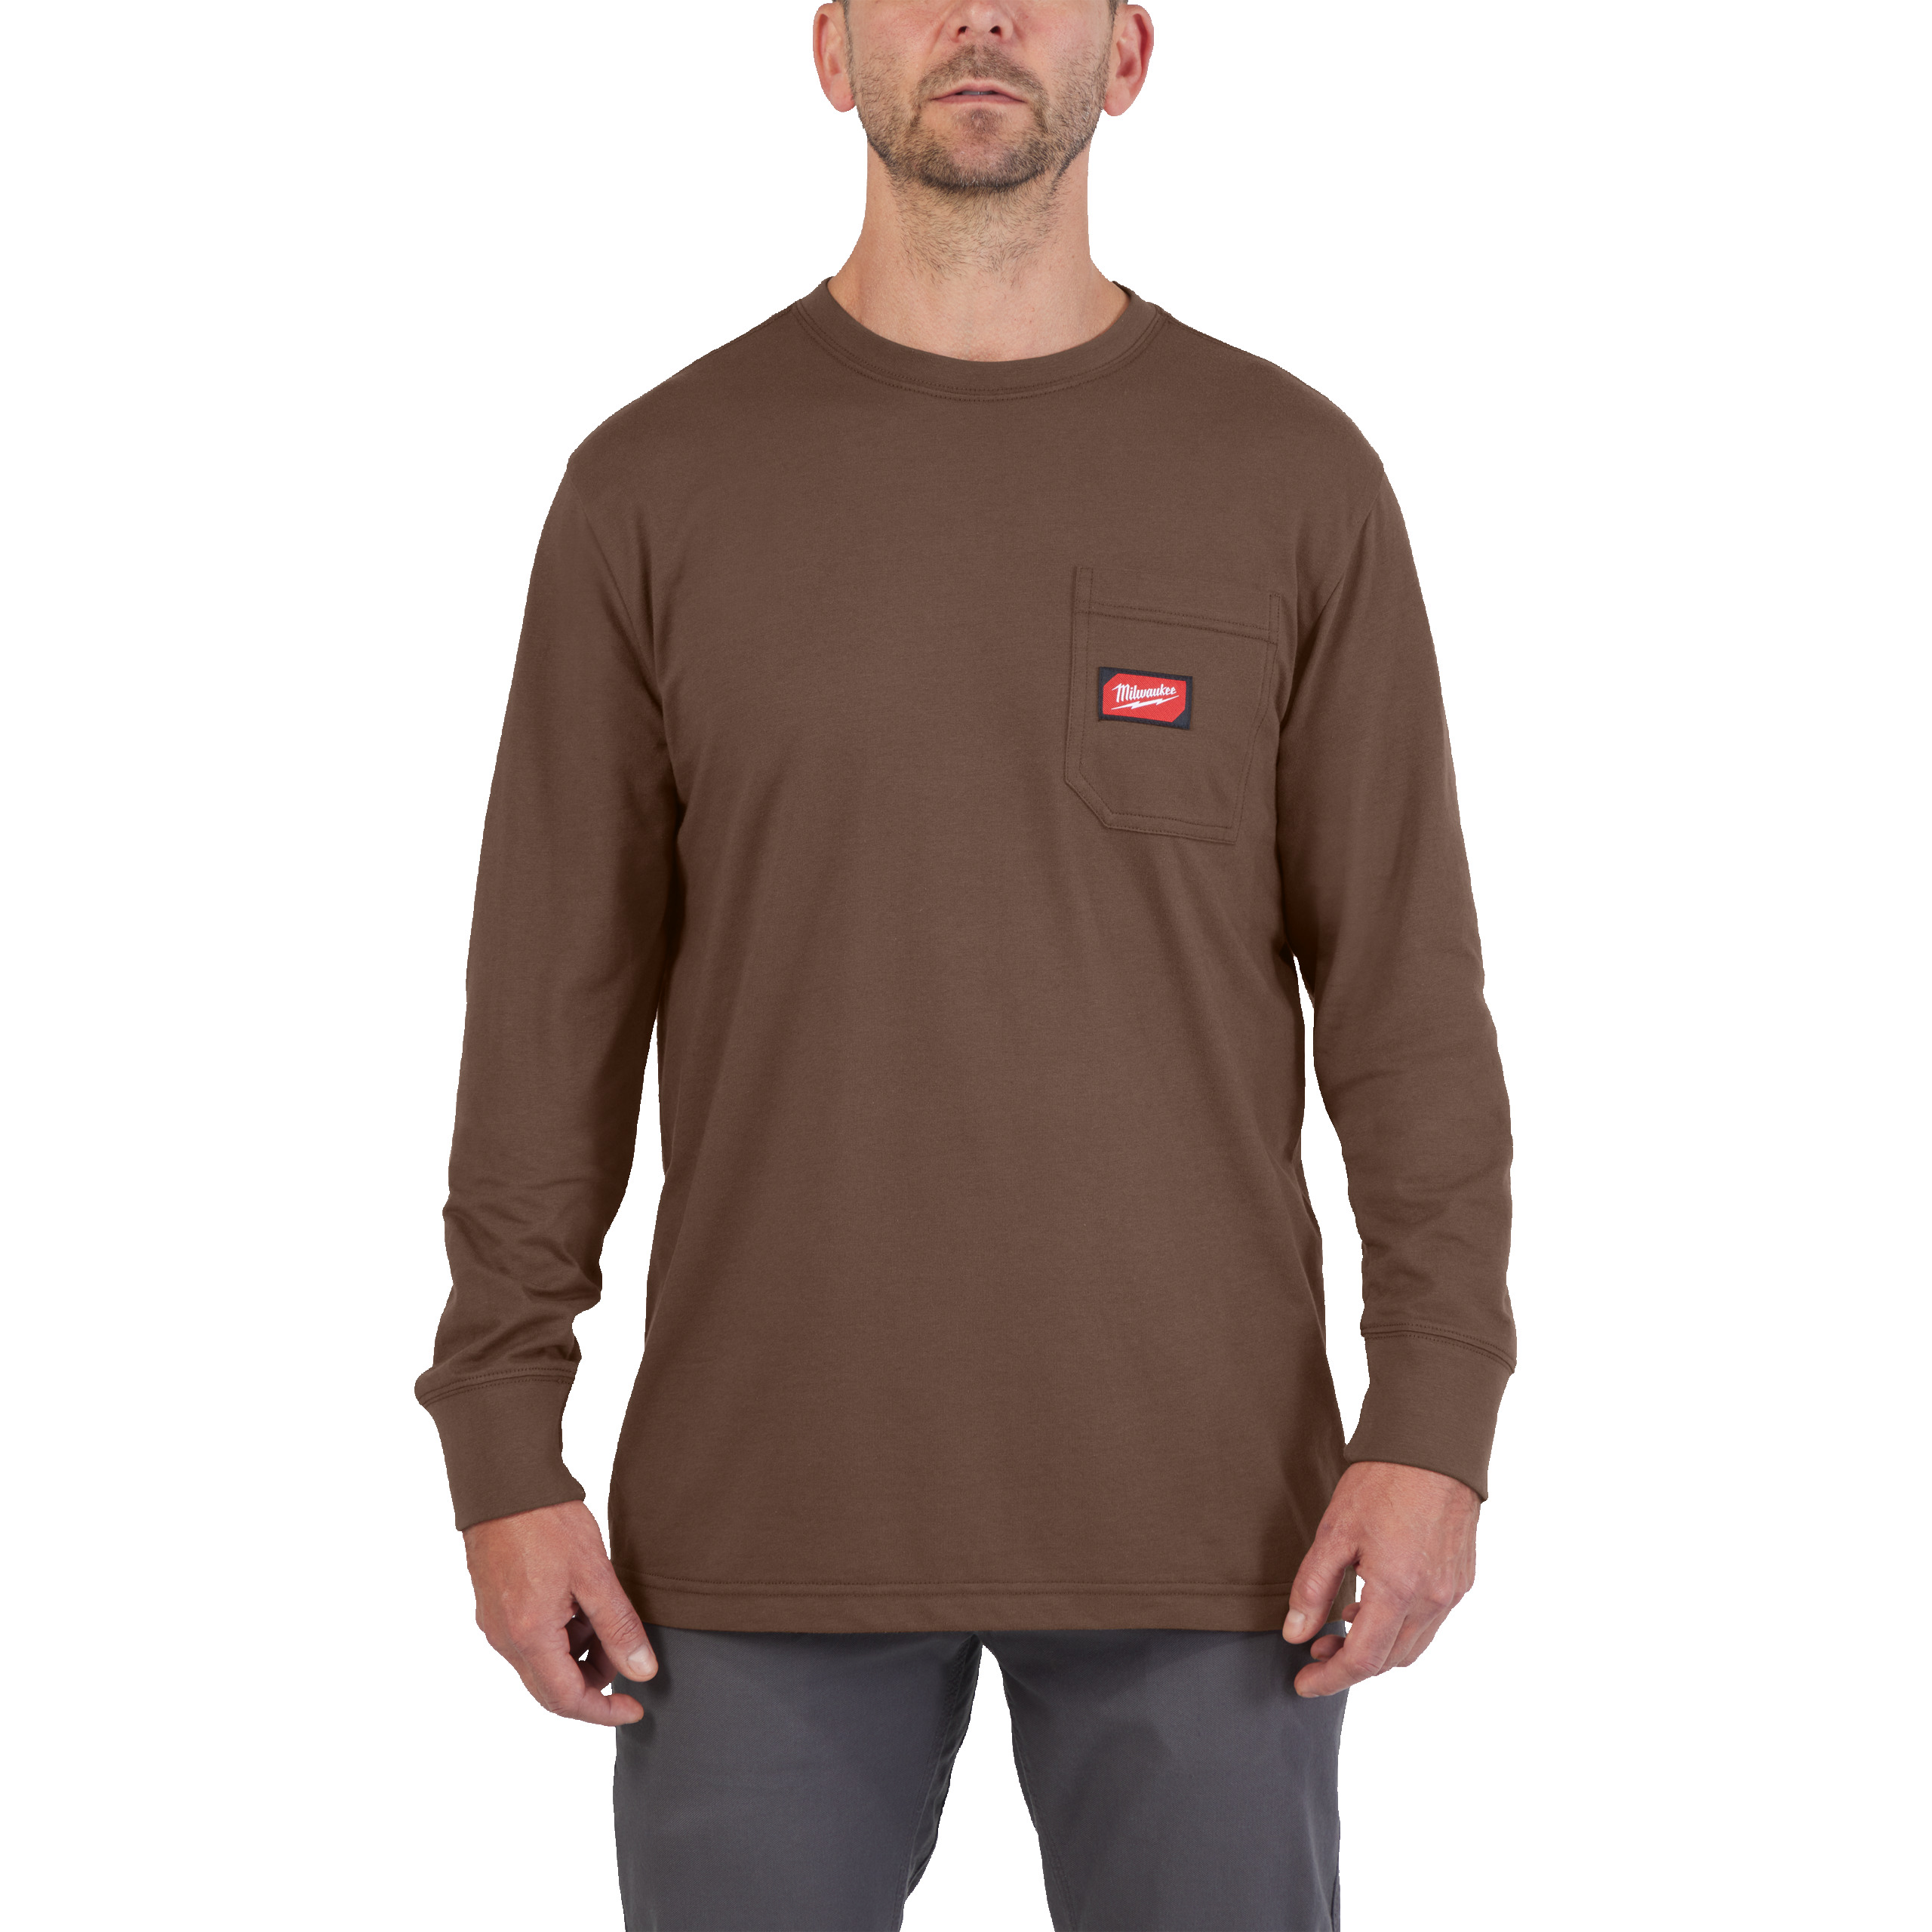 Arbeits-Langarm-Shirt braun mit UV-Schutz (WTLSBR-XL)